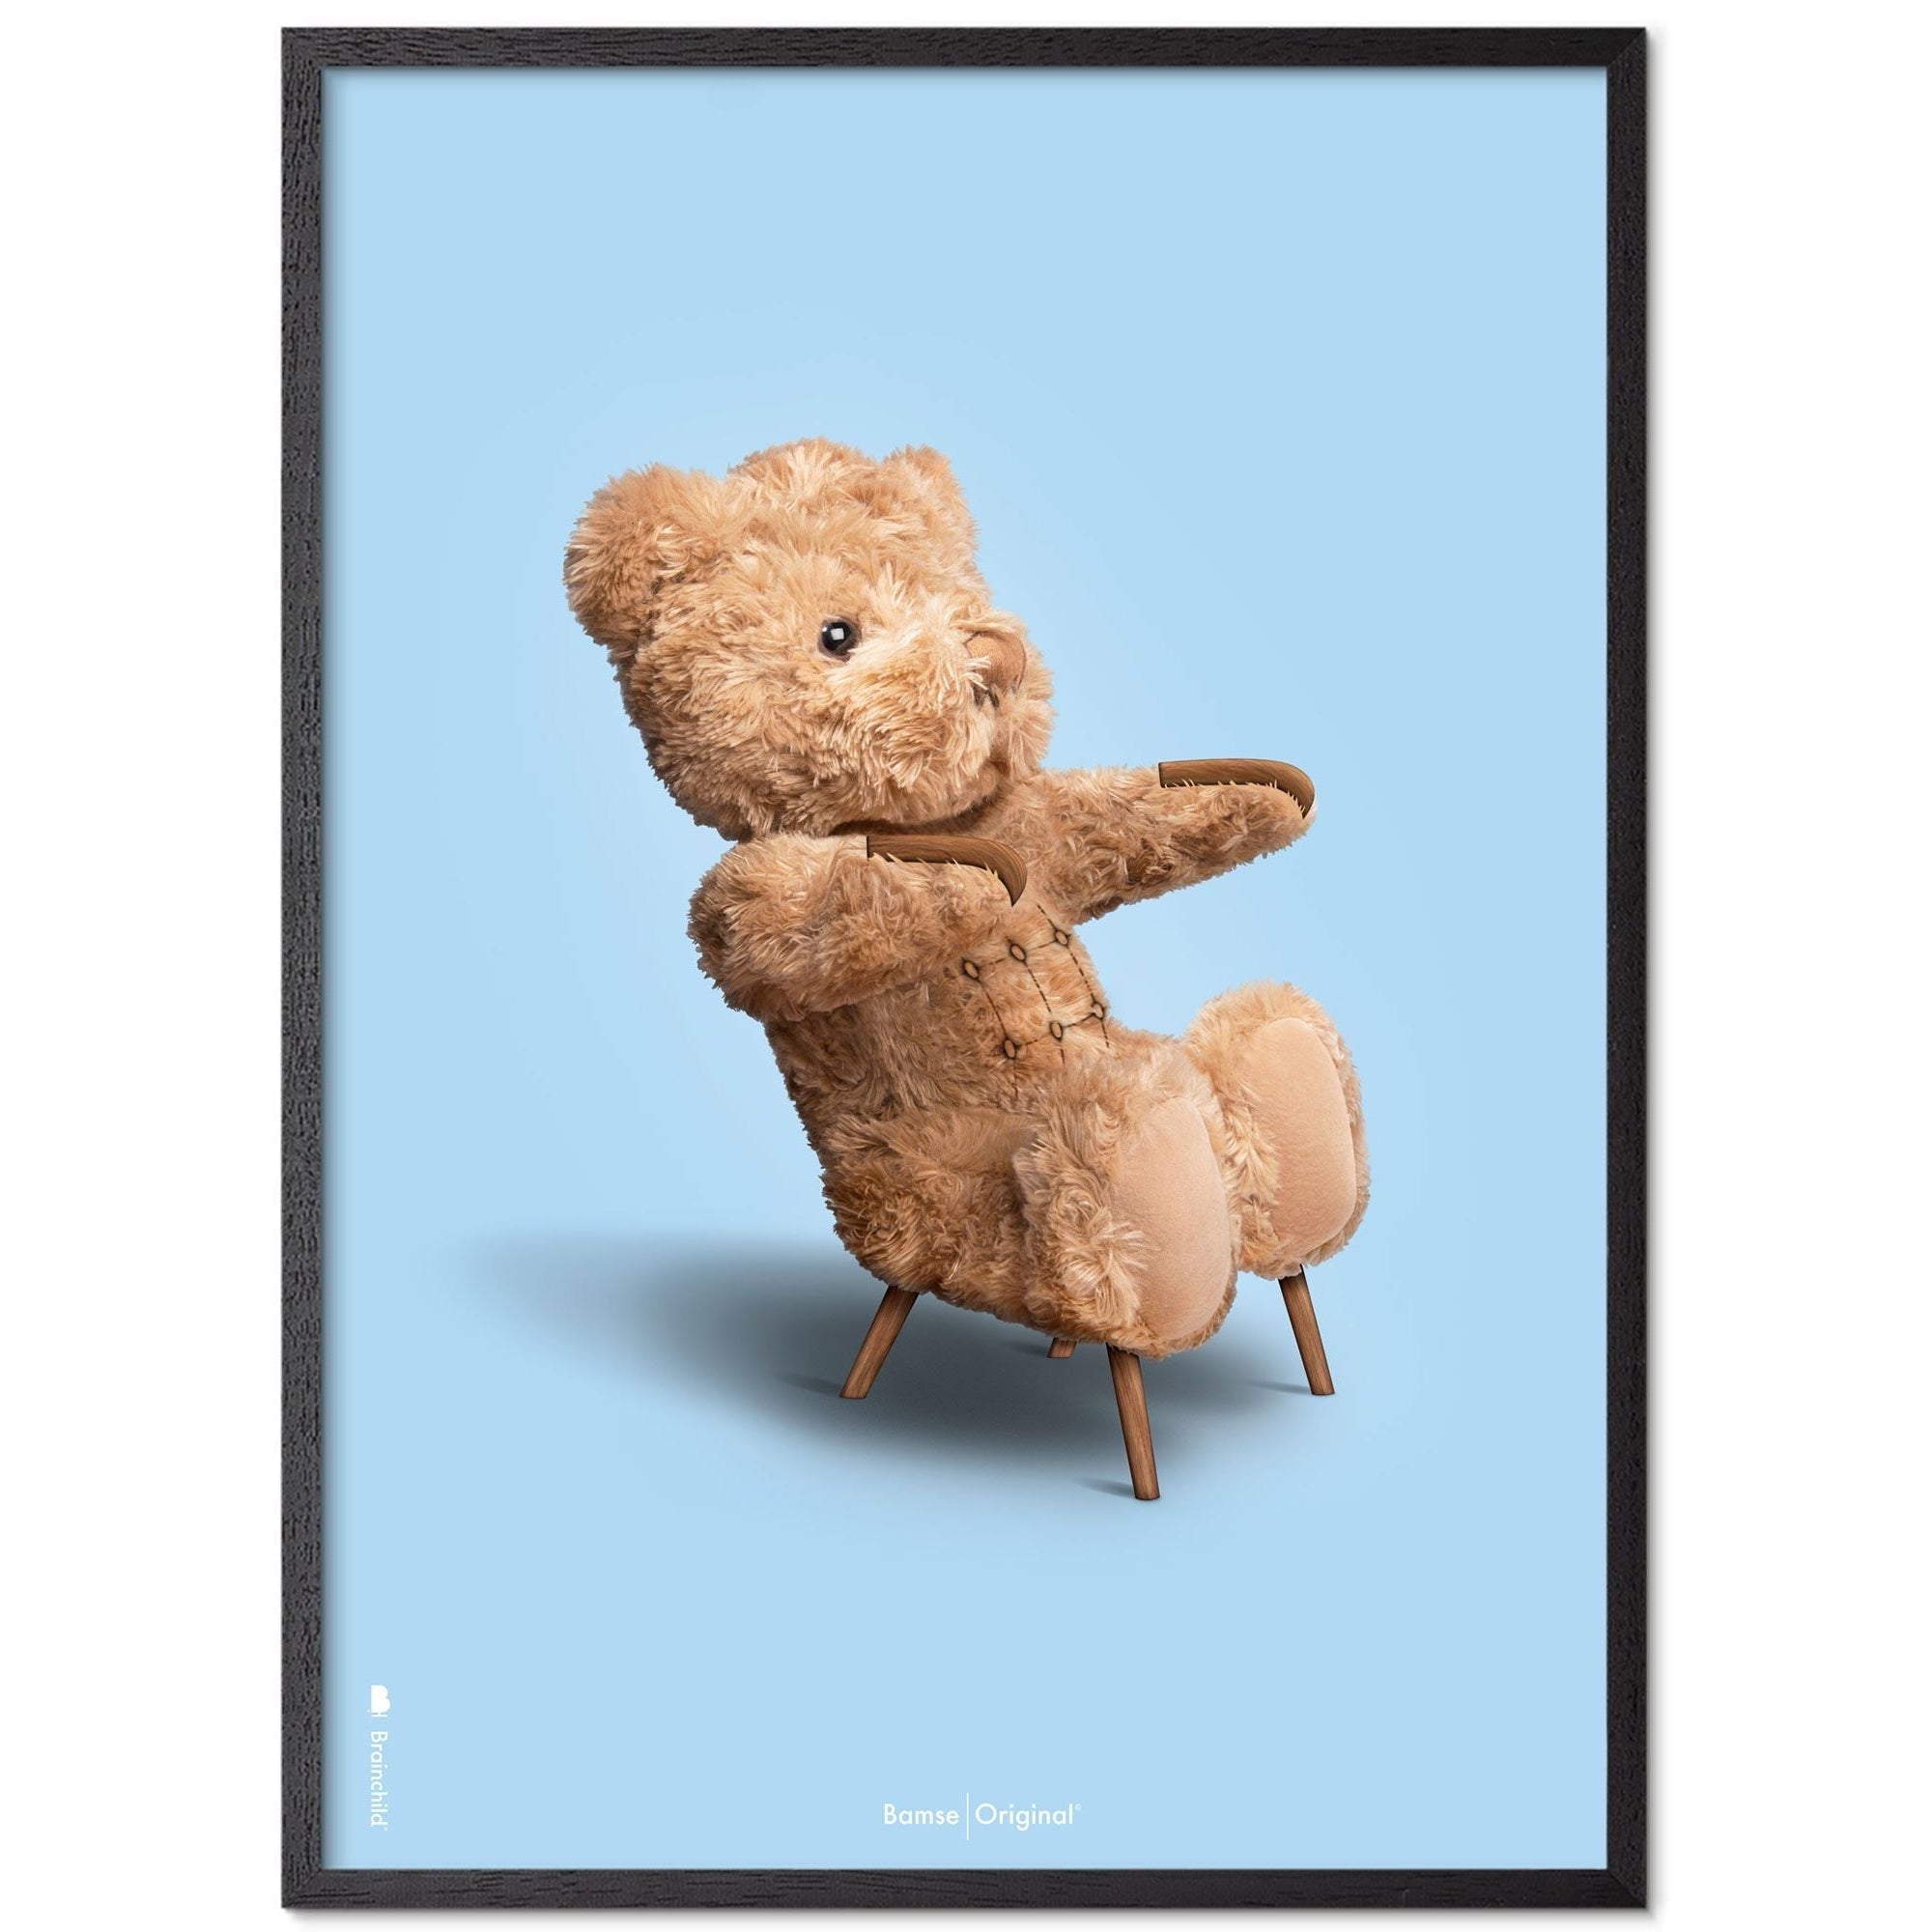 Brainchild Teddybeer klassiek poster frame gemaakt van zwart gelak hout 70x100 cm, lichtblauwe achtergrond